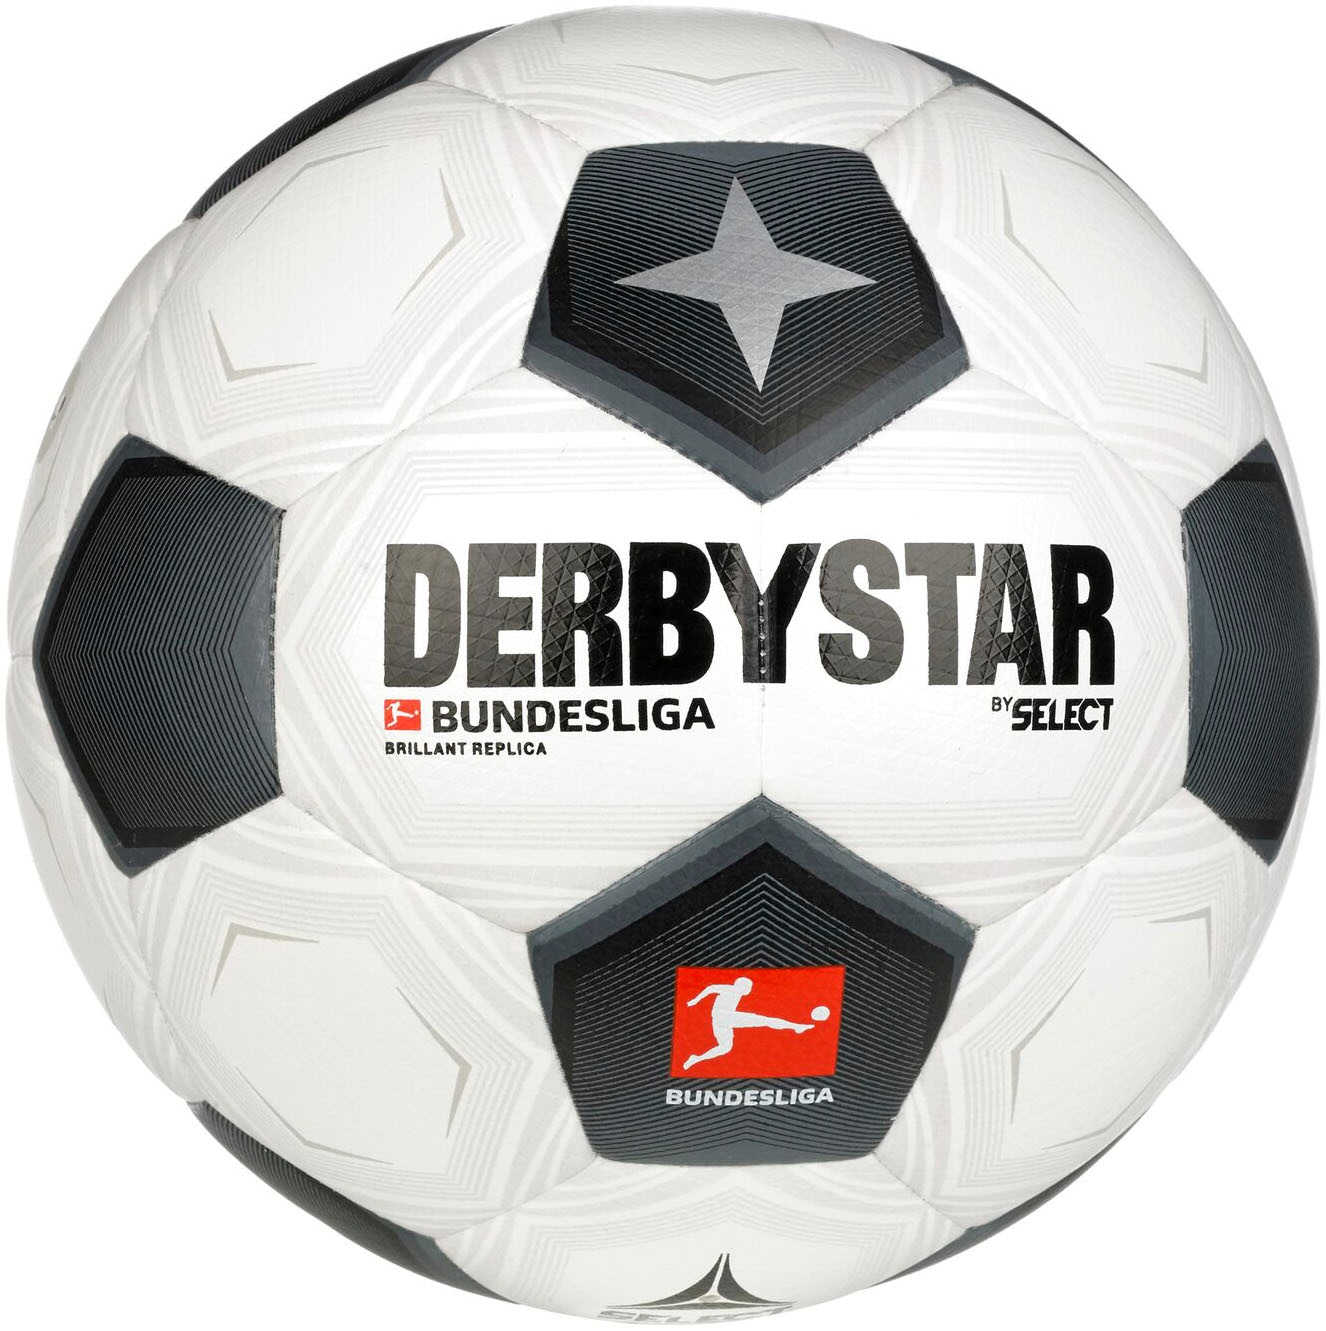 Derbystar Fußball »Bundesliga Brillant Replica Classic«